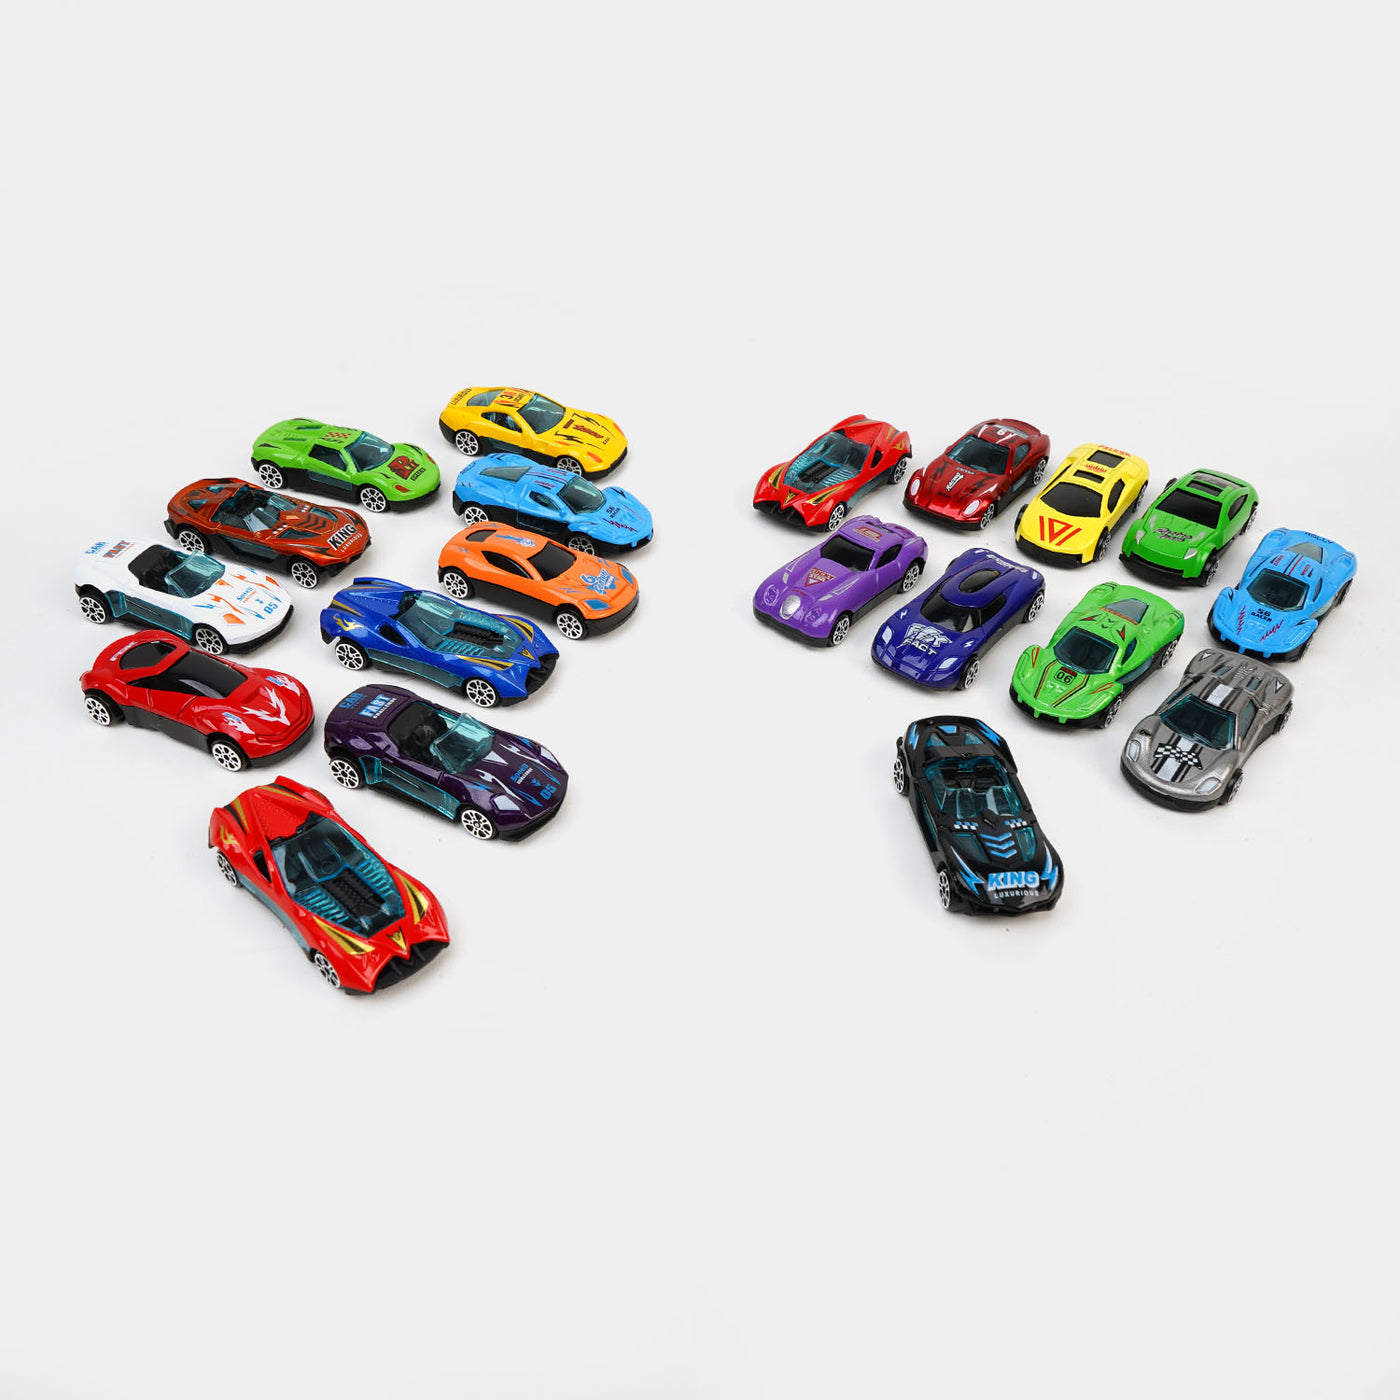 Car Set Toy 20PCs For Kids